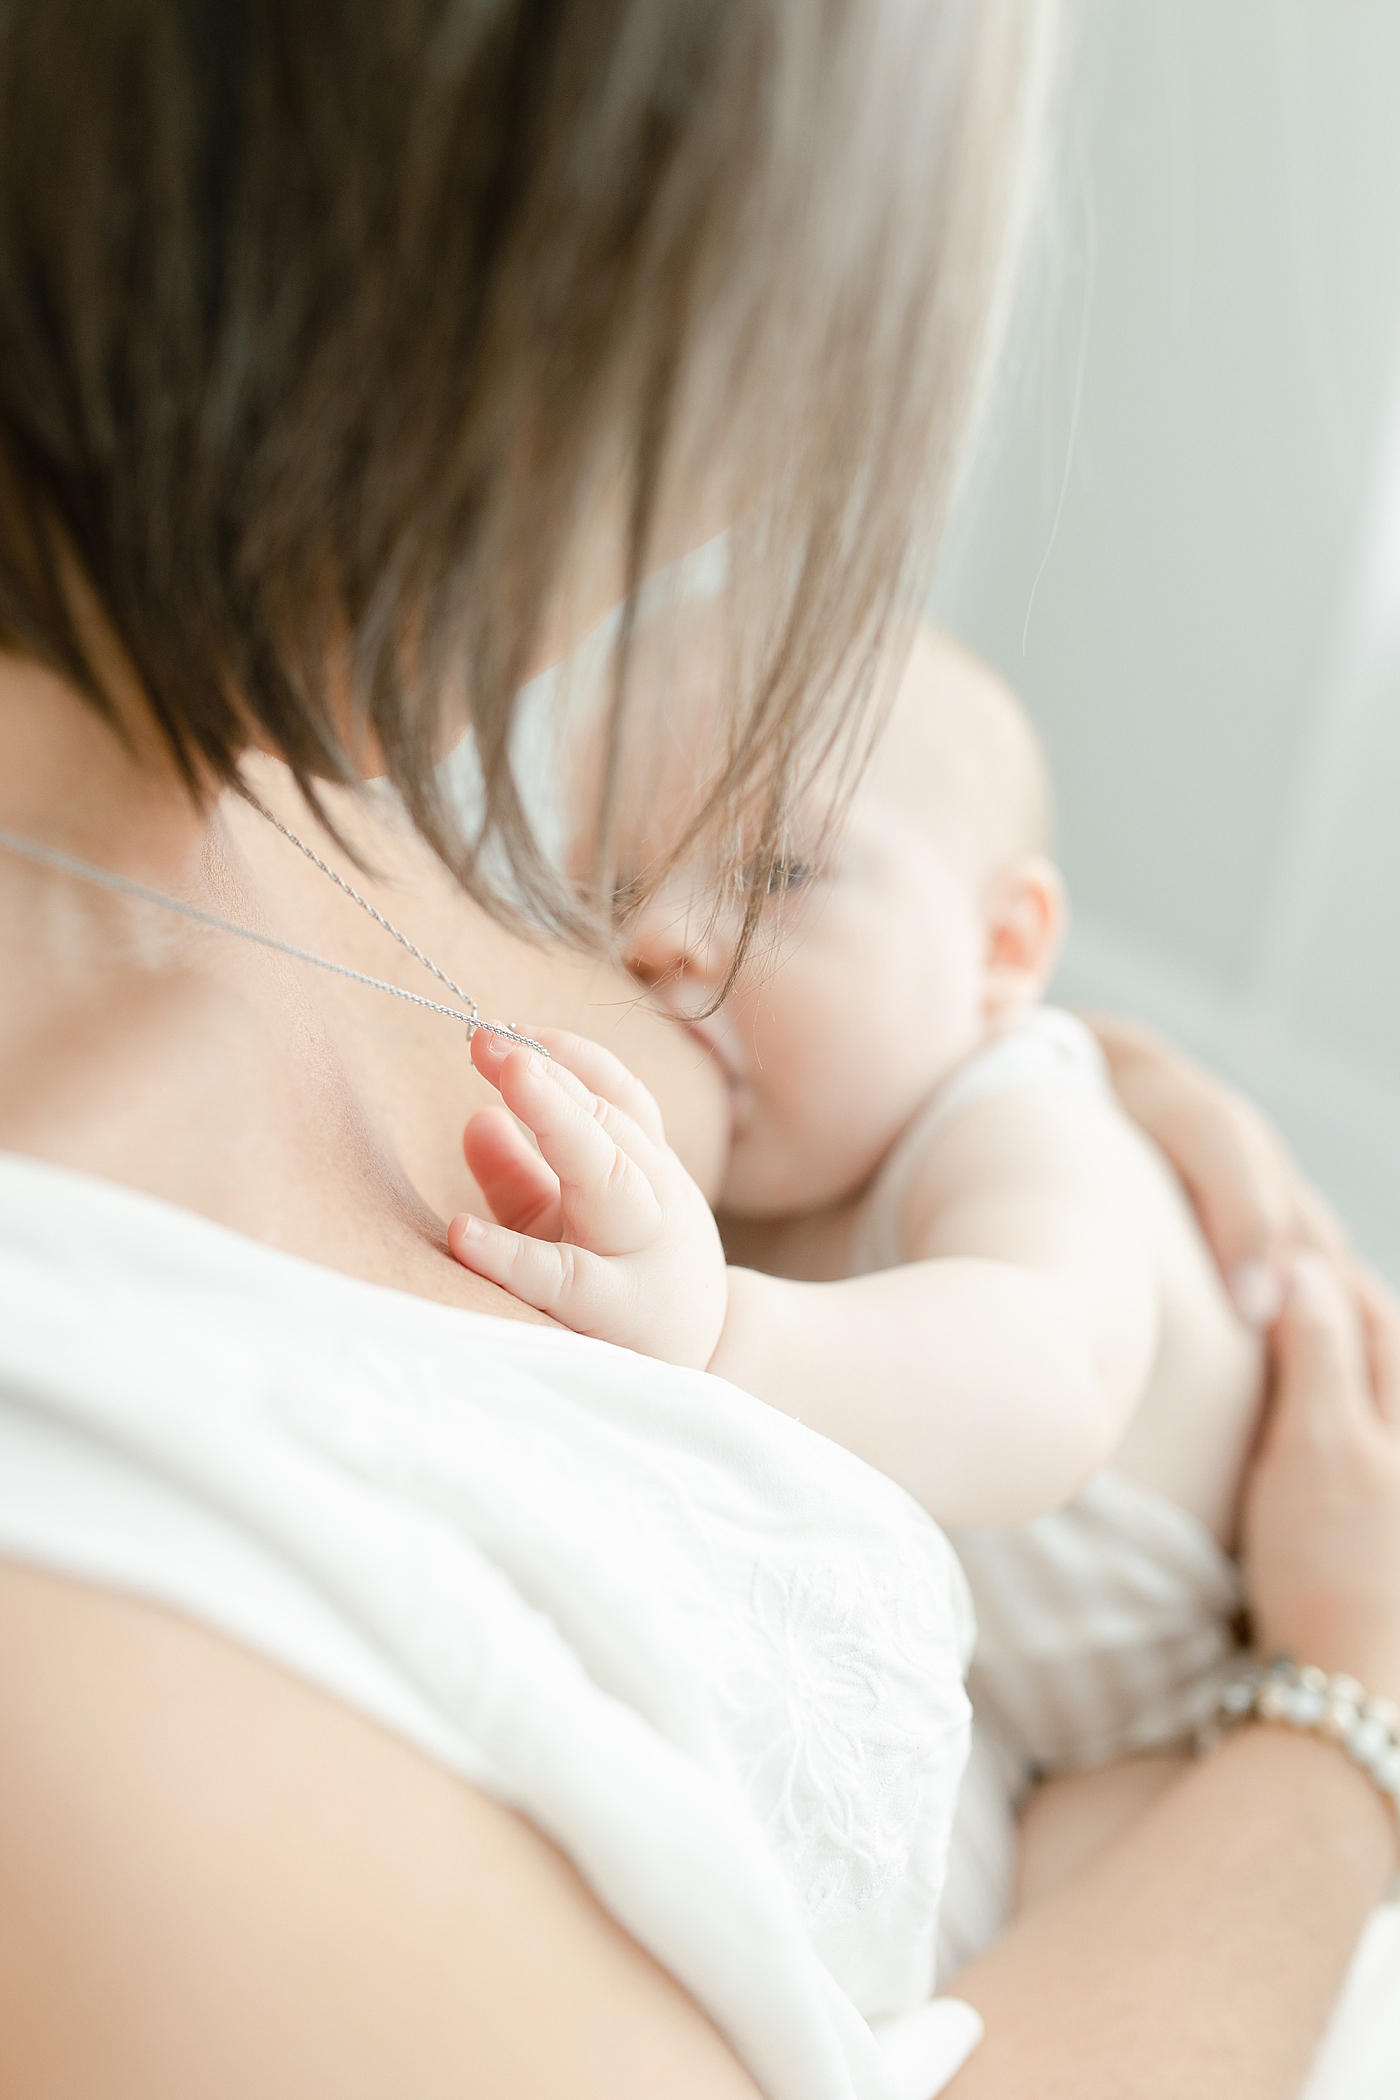 mom nursing baby while breastfeeding | Photo by Little Sunshine Photography